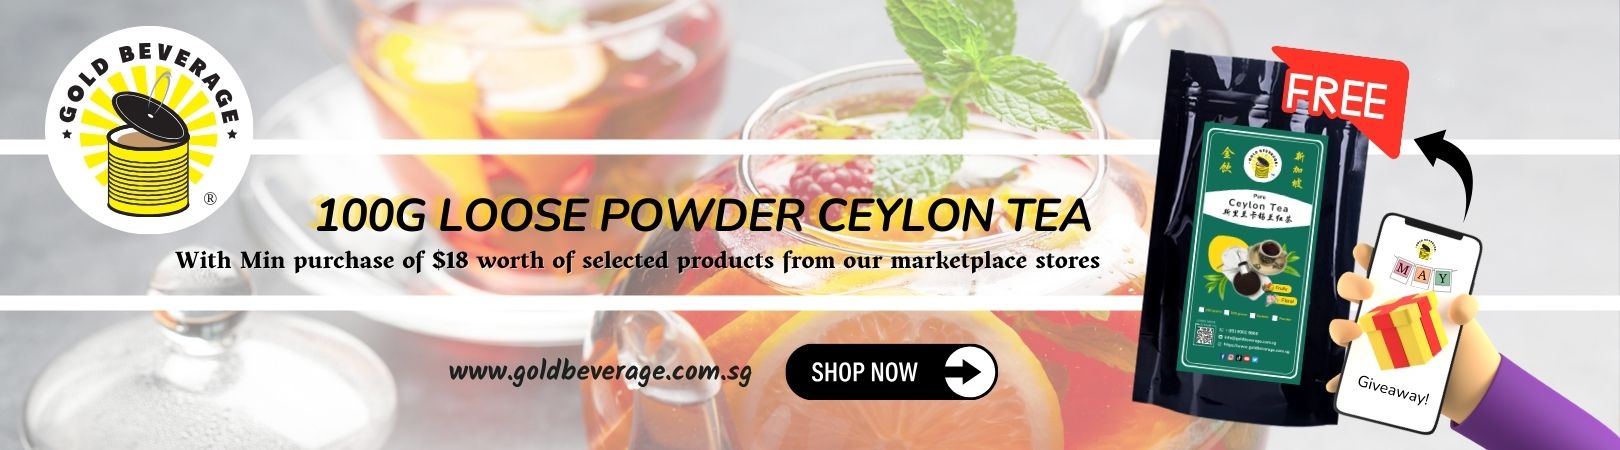 May Promo Ceylon Tea webpage